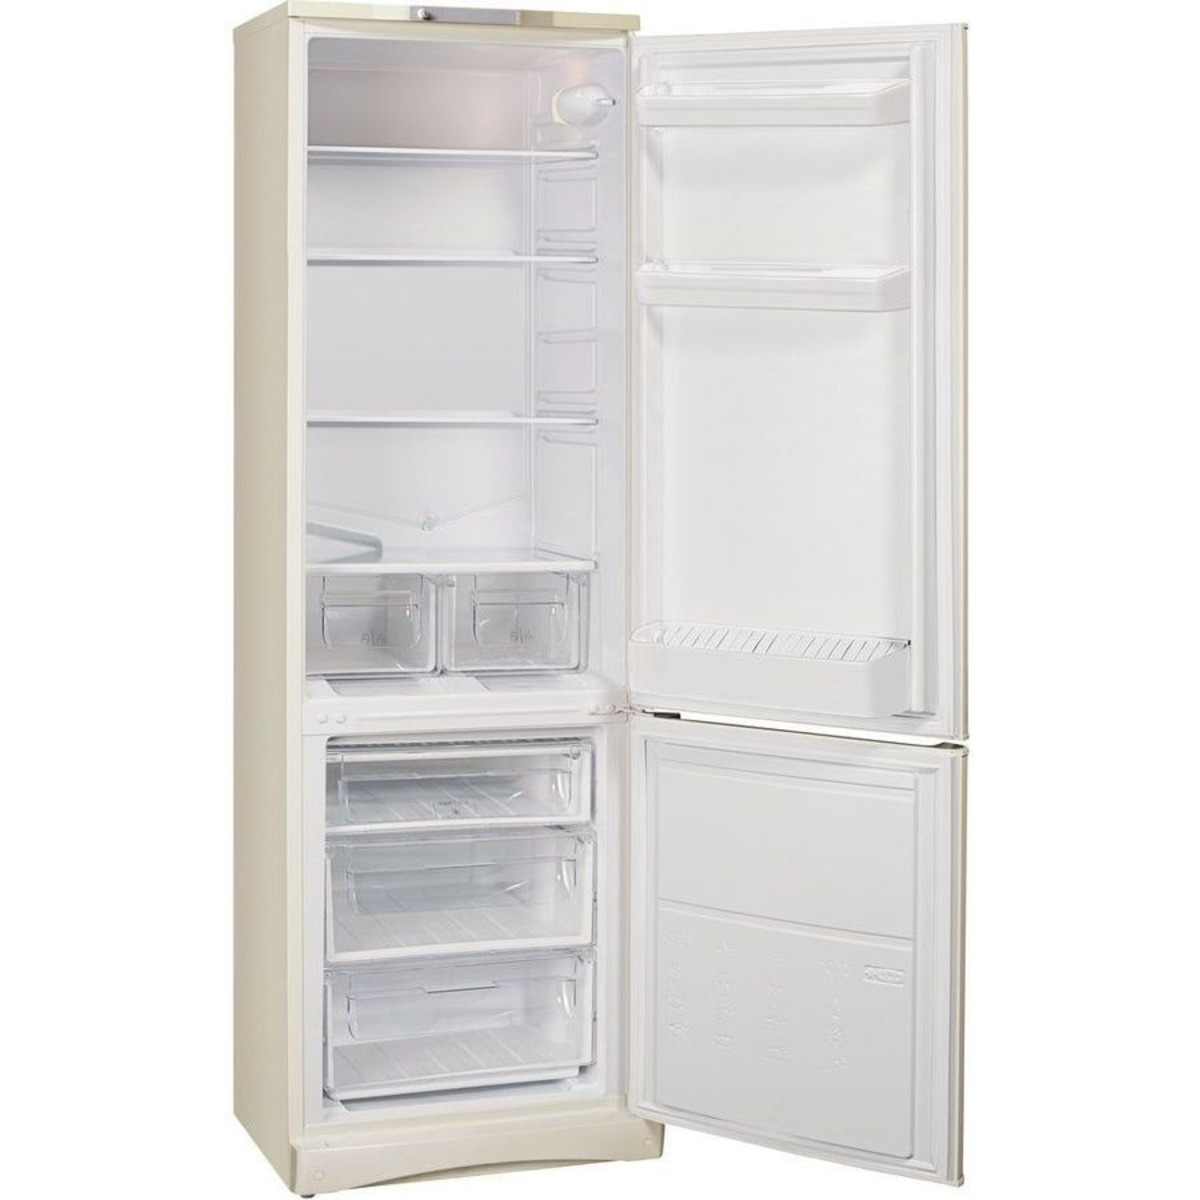 Холодильник Stinol STS 185 E (Цвет: Beige)